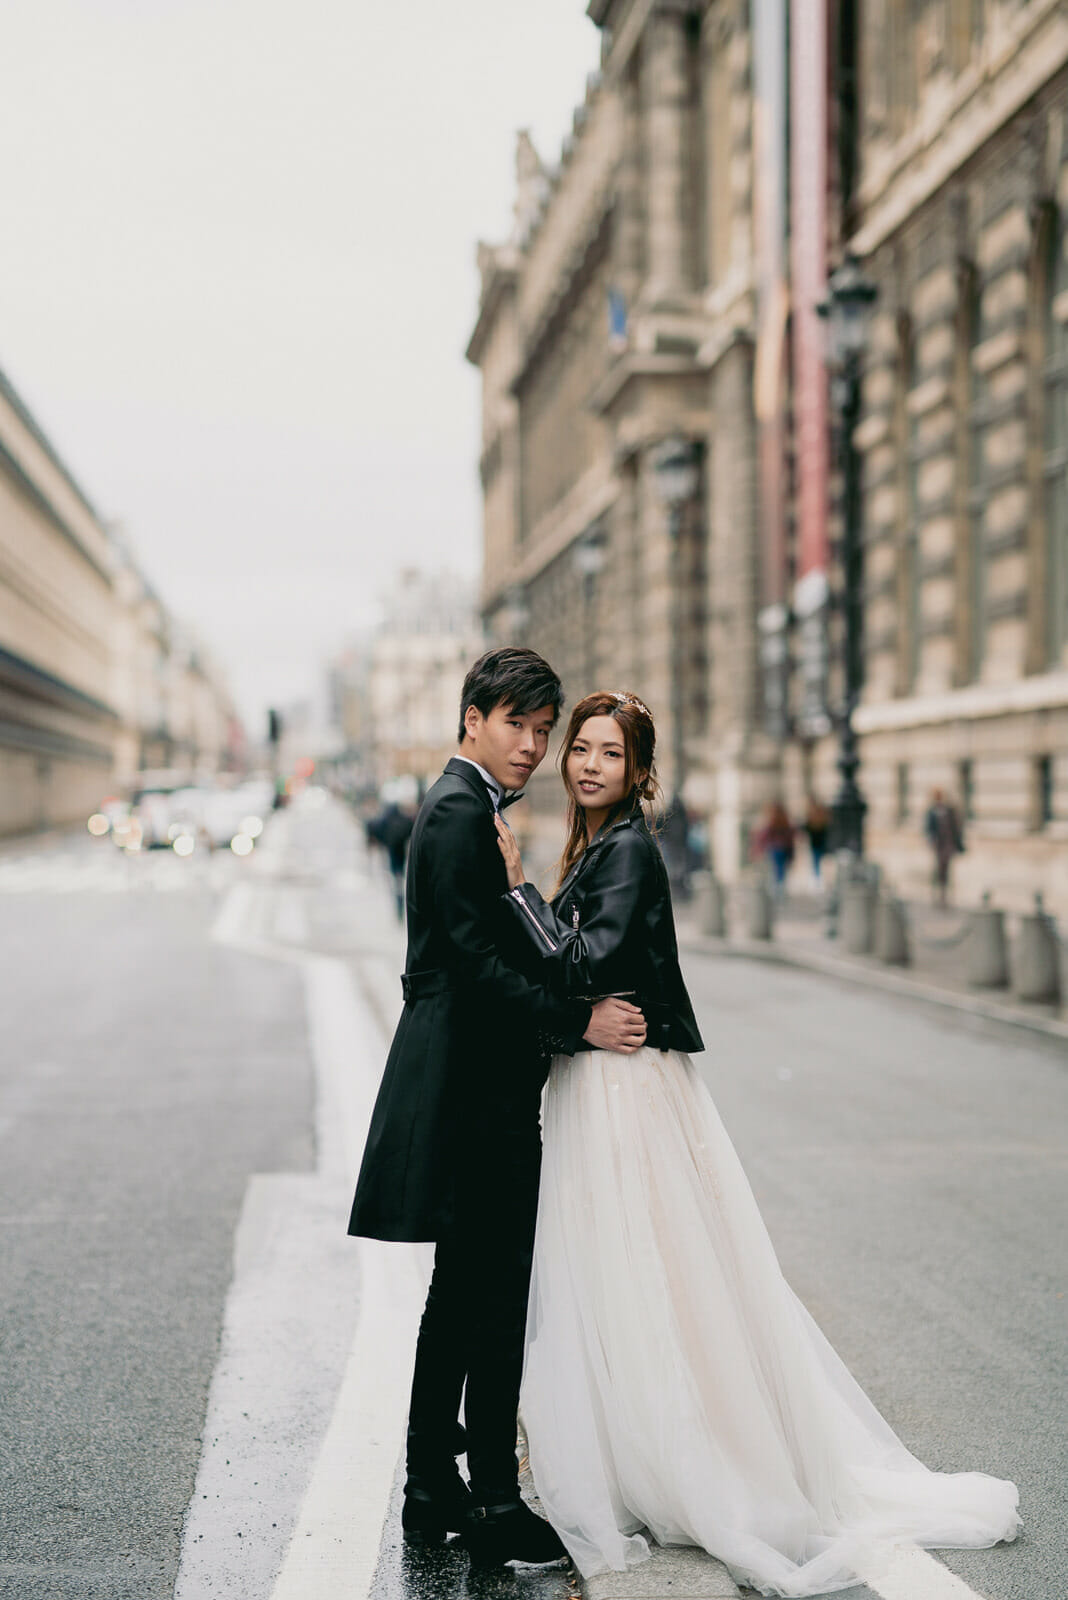 Fashionable couple pre-wedding photoshoot near the Louvre